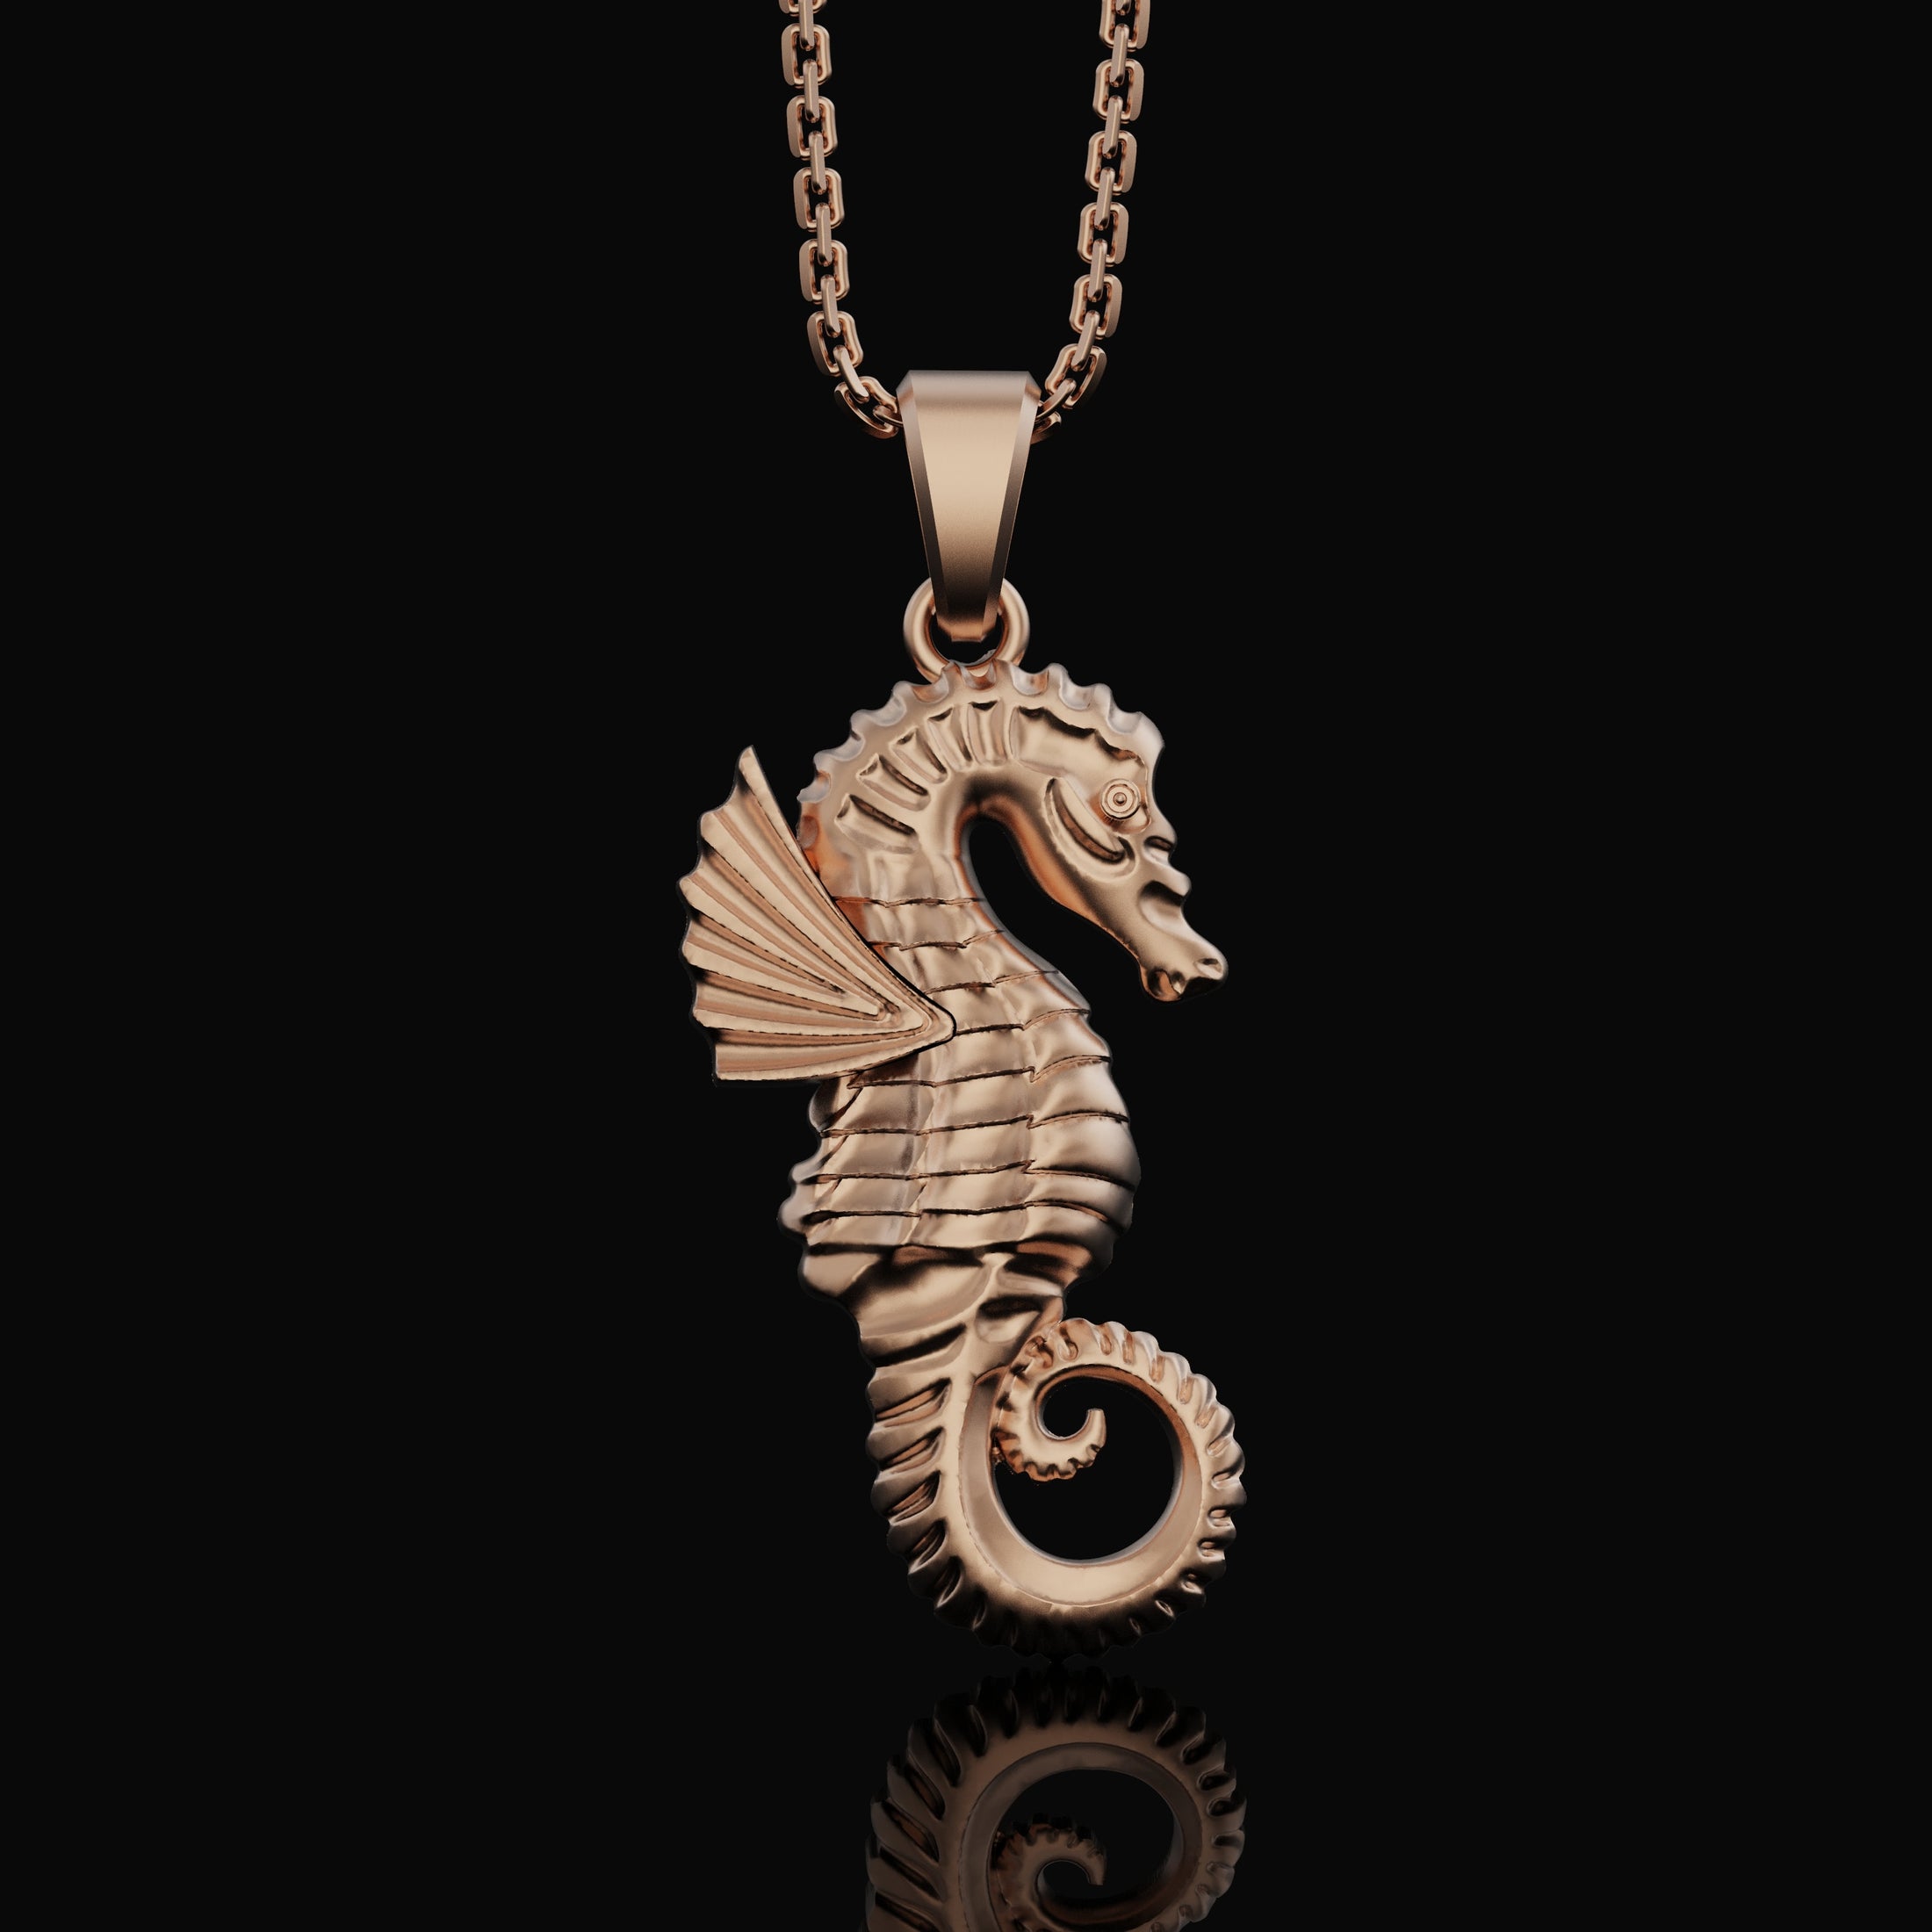 Handmade Silver Seahorse